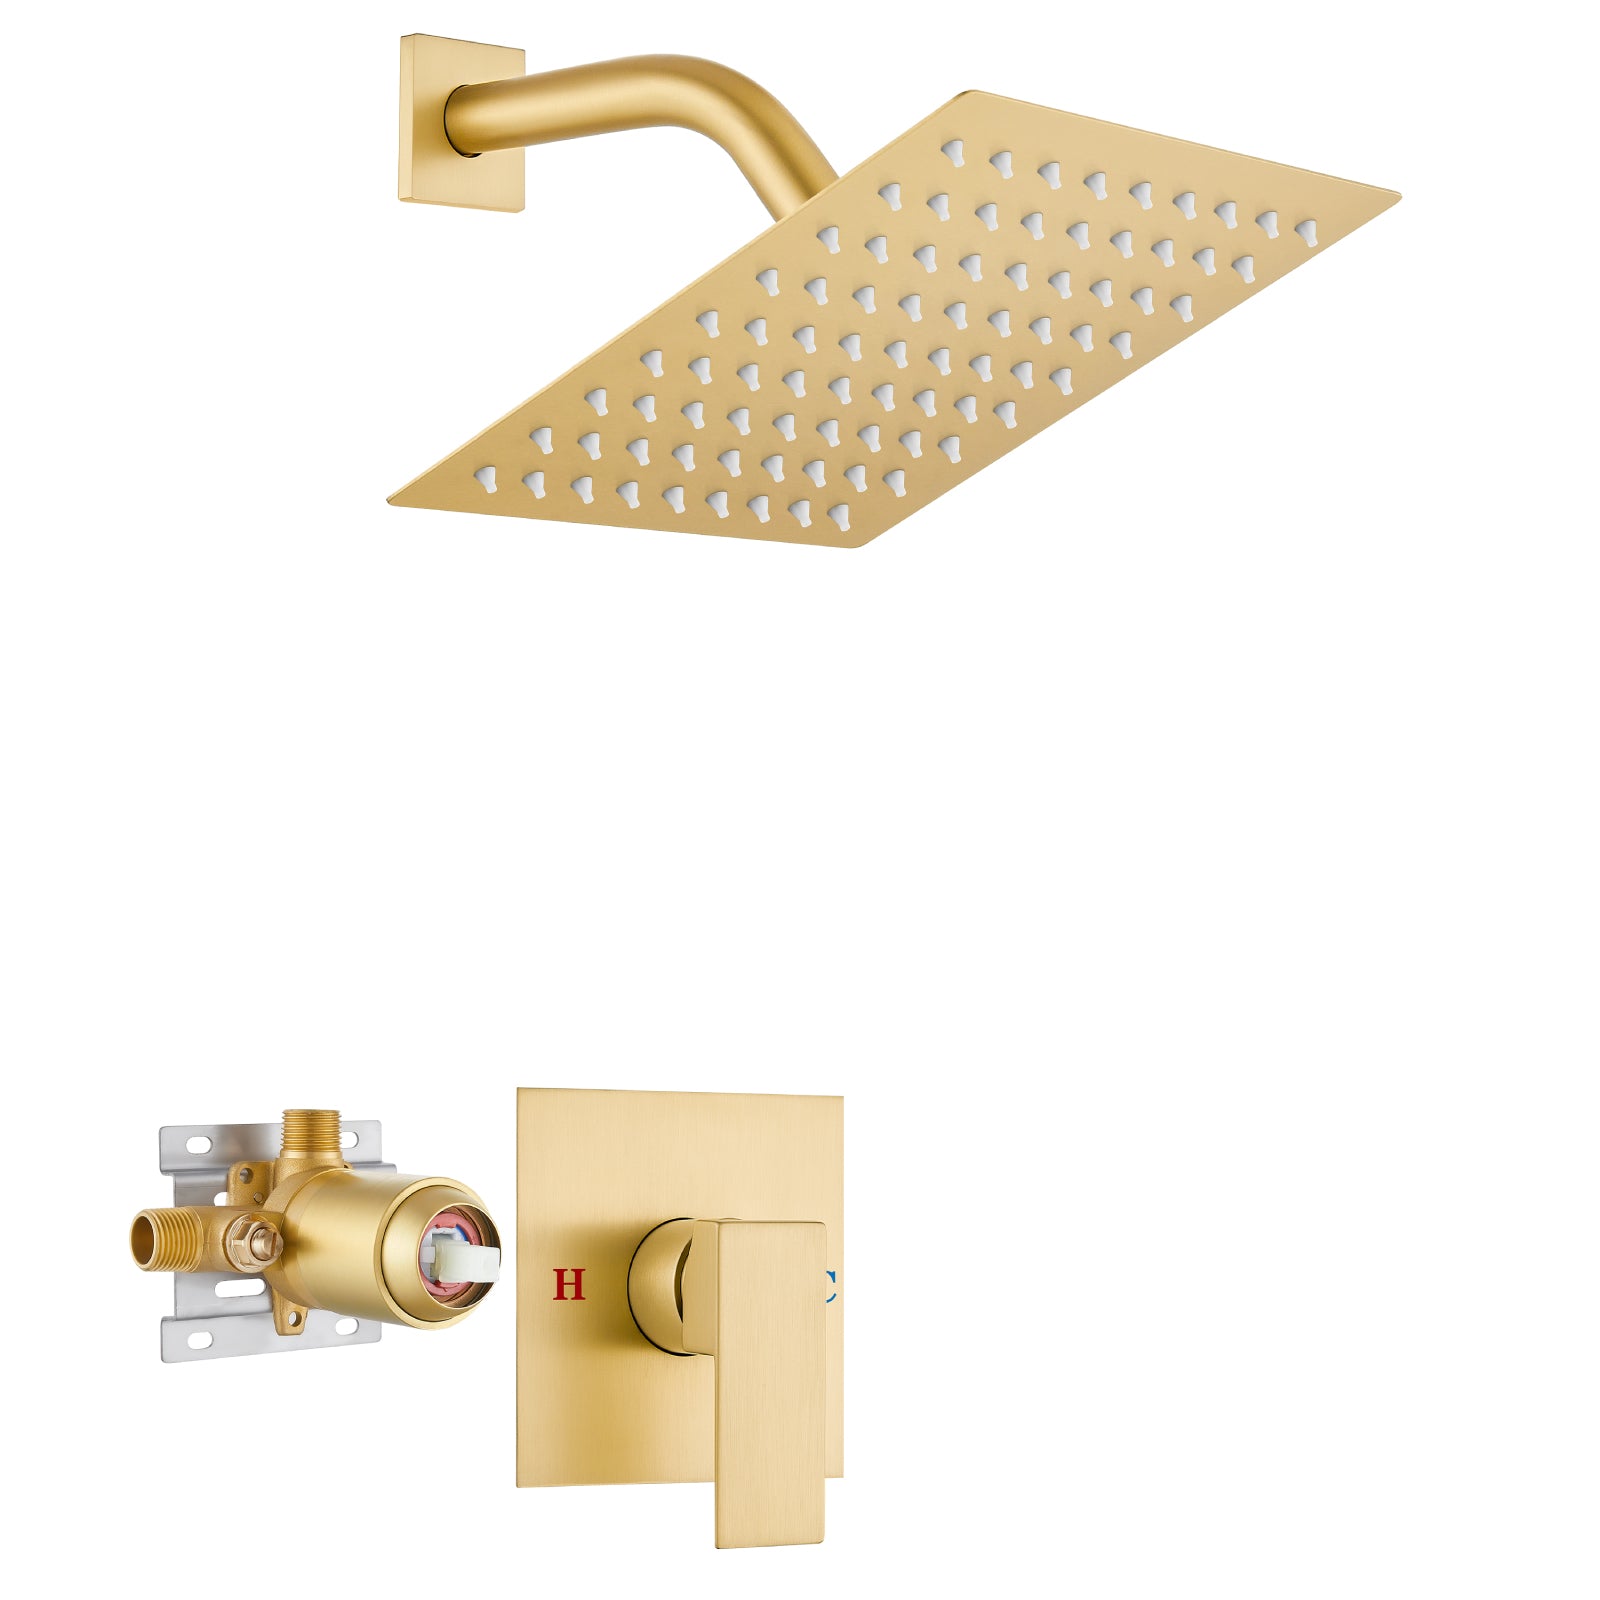 Airuida Shower Faucet Set Bathroom Rain Shower System 8 Inch Square Showerhead Single Function Single Handle Shower Trim Kit With Thread Rough-in Valve